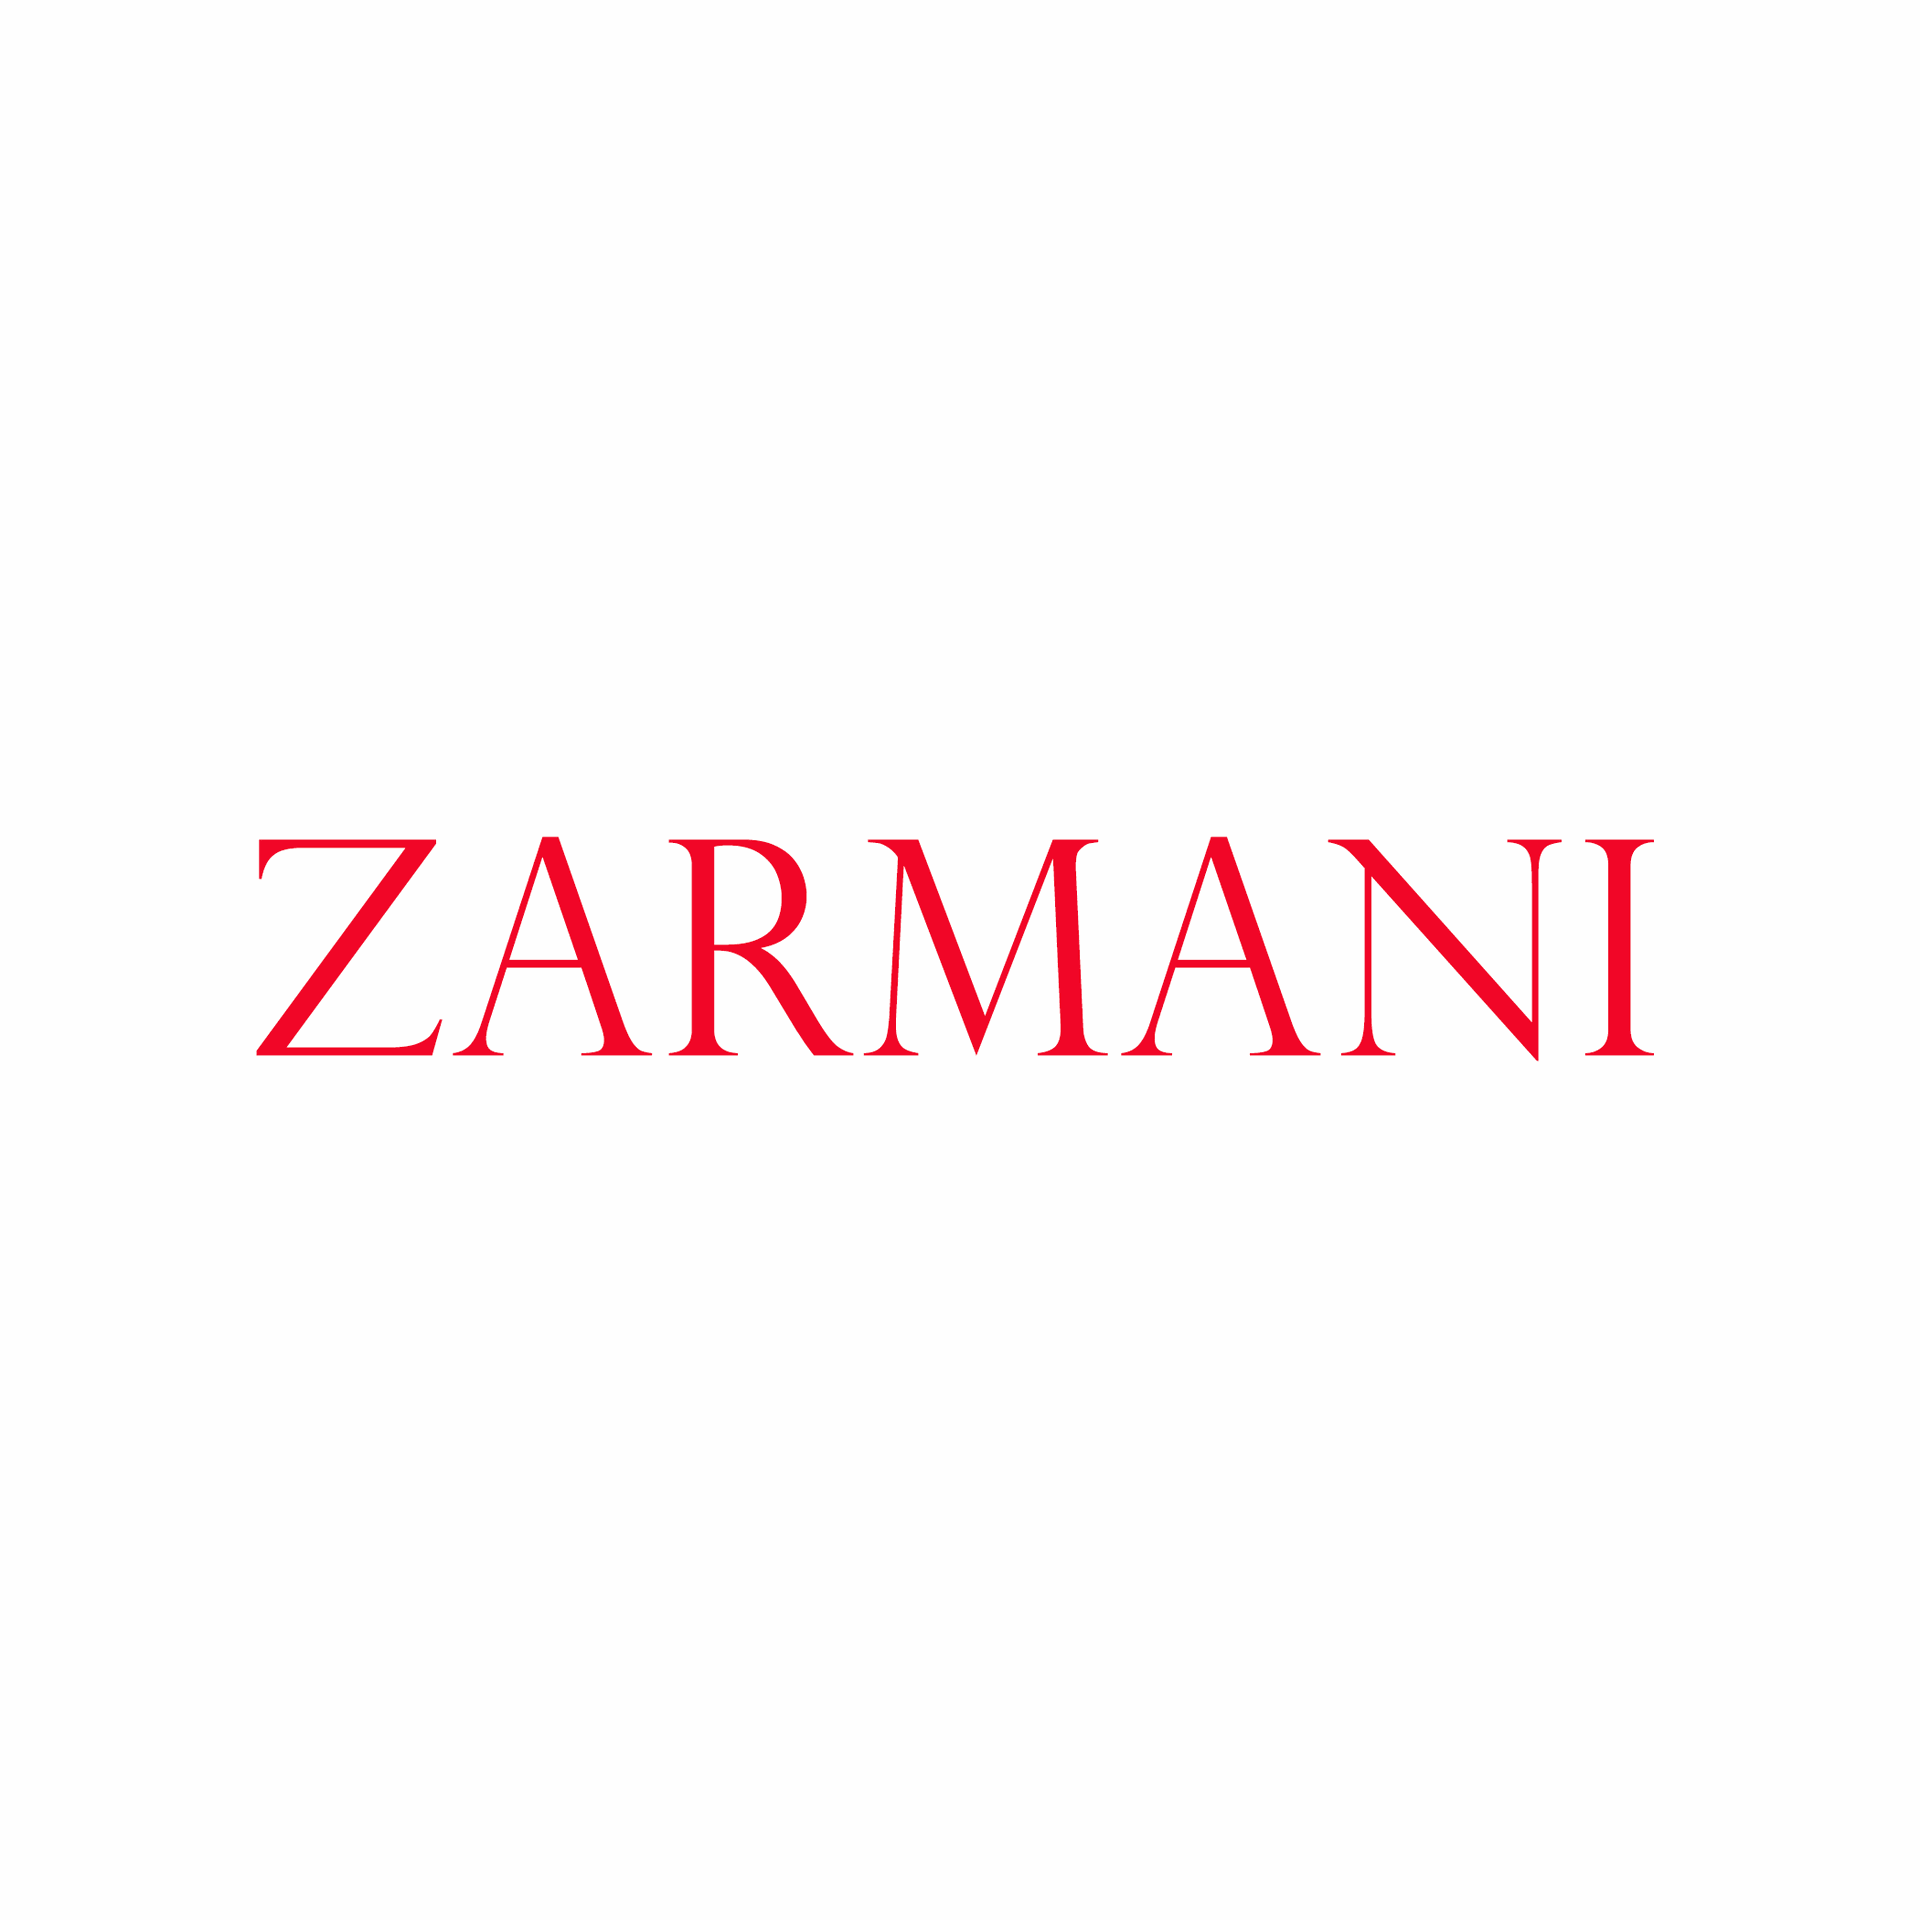 Product Brand: Zarmani